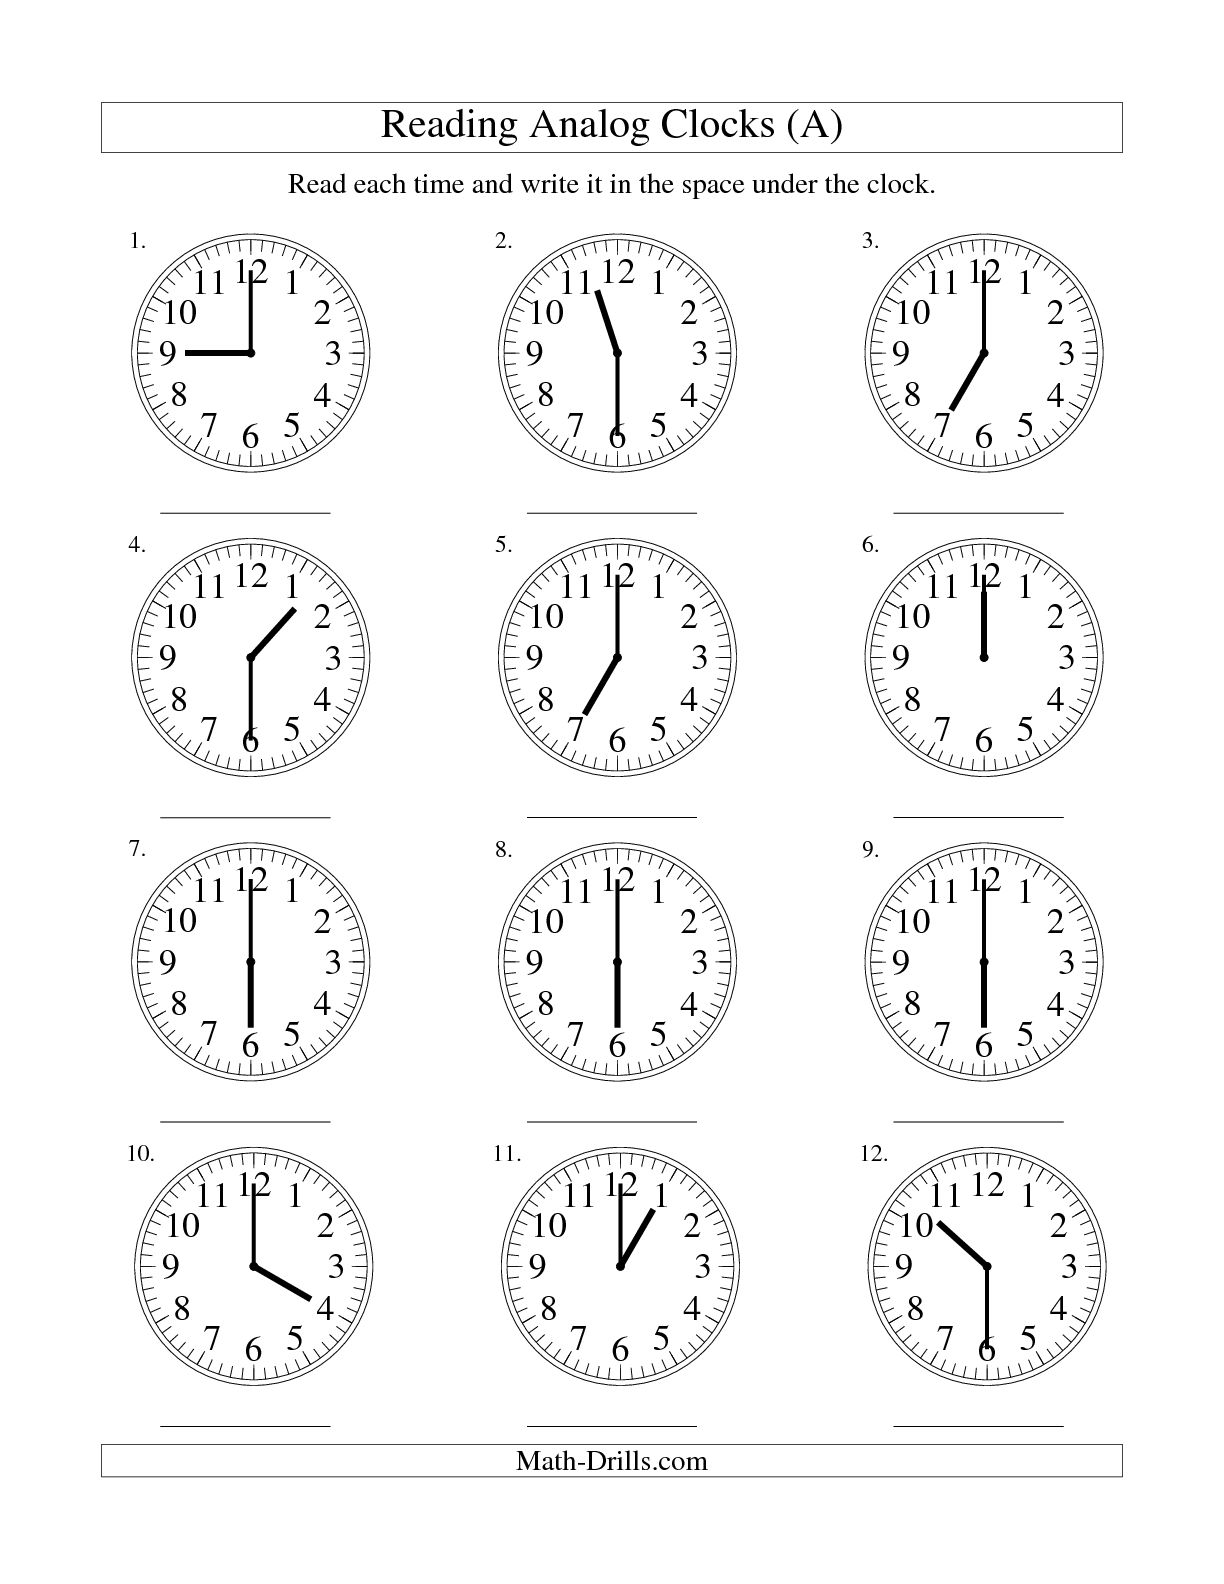 Reading Analog Clock Worksheets Image